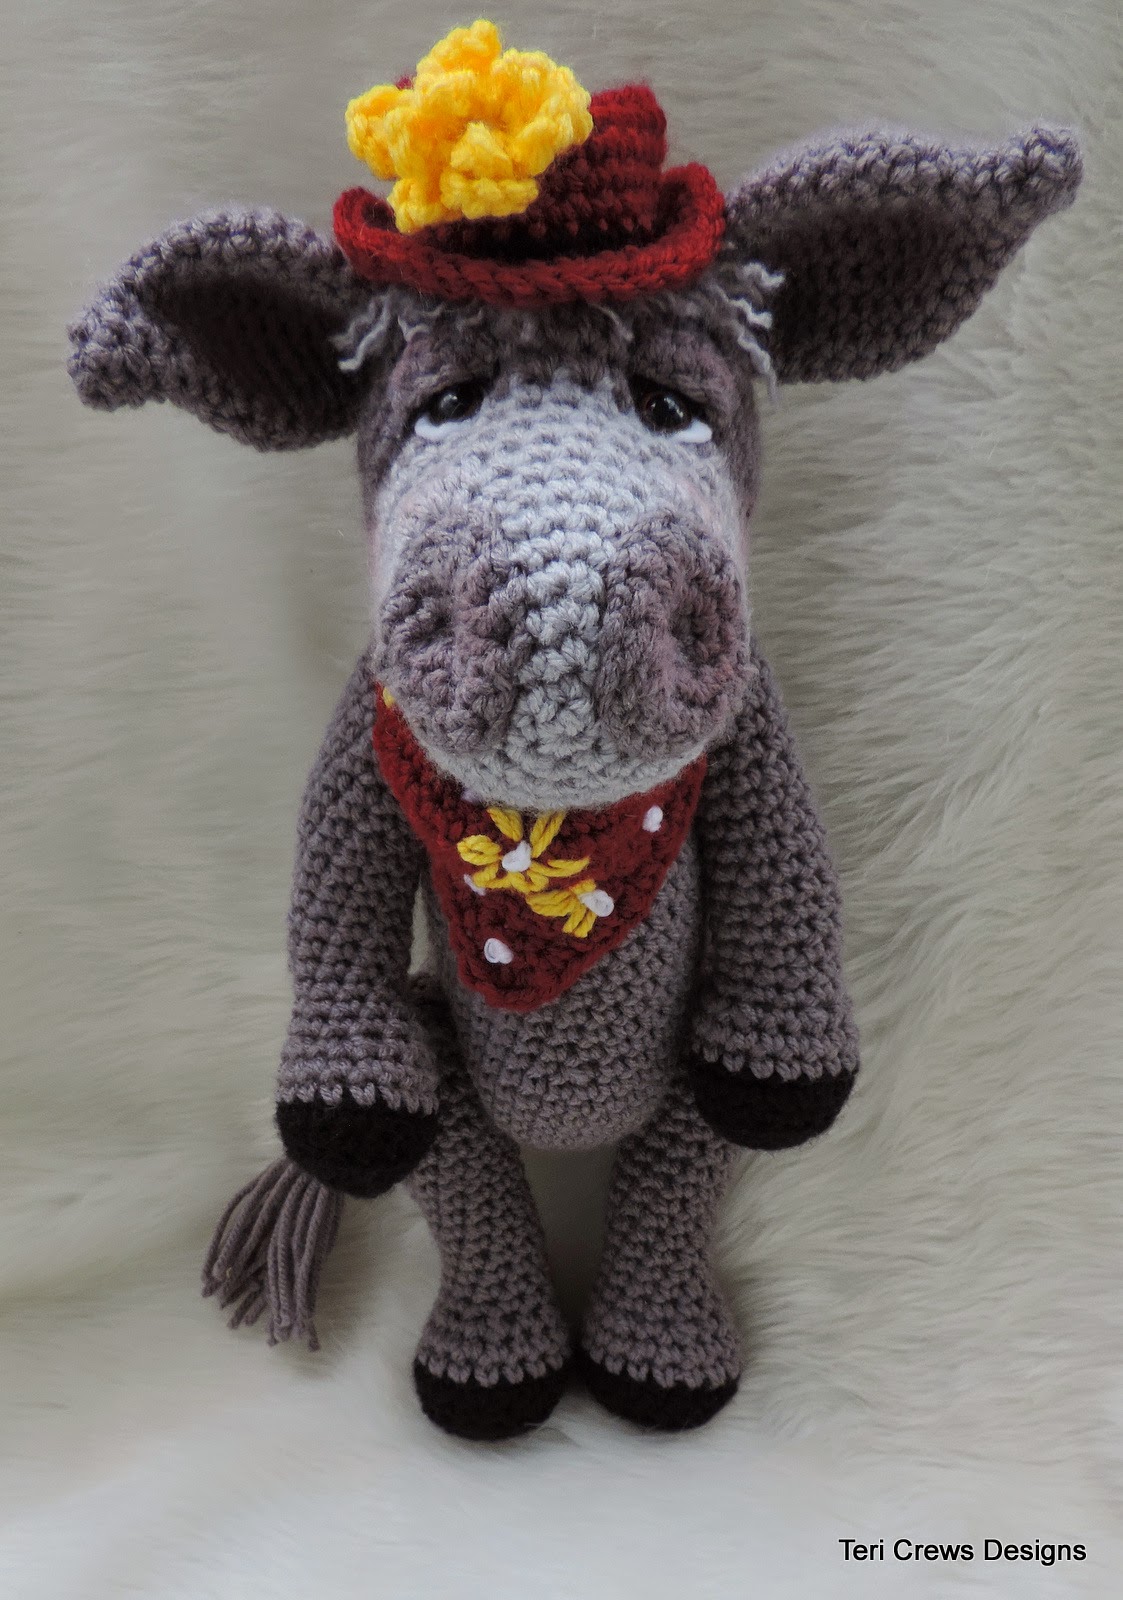 teri-s-blog-new-donkey-crochet-pattern